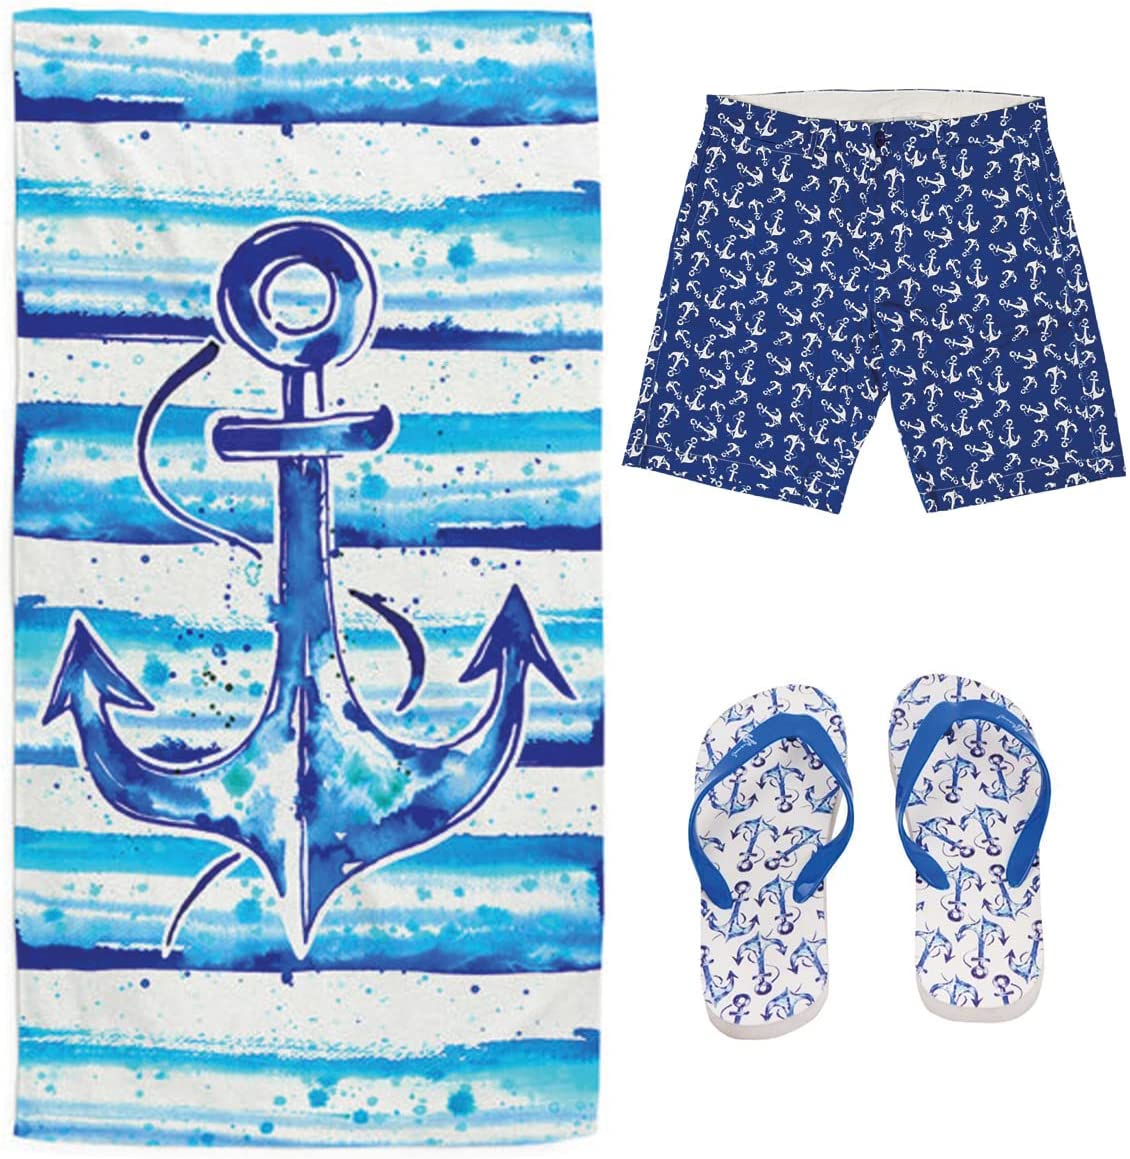 Anchor design beach towel   anchor design mid-rise medium shorts   anchor design 38-39 size flipflop